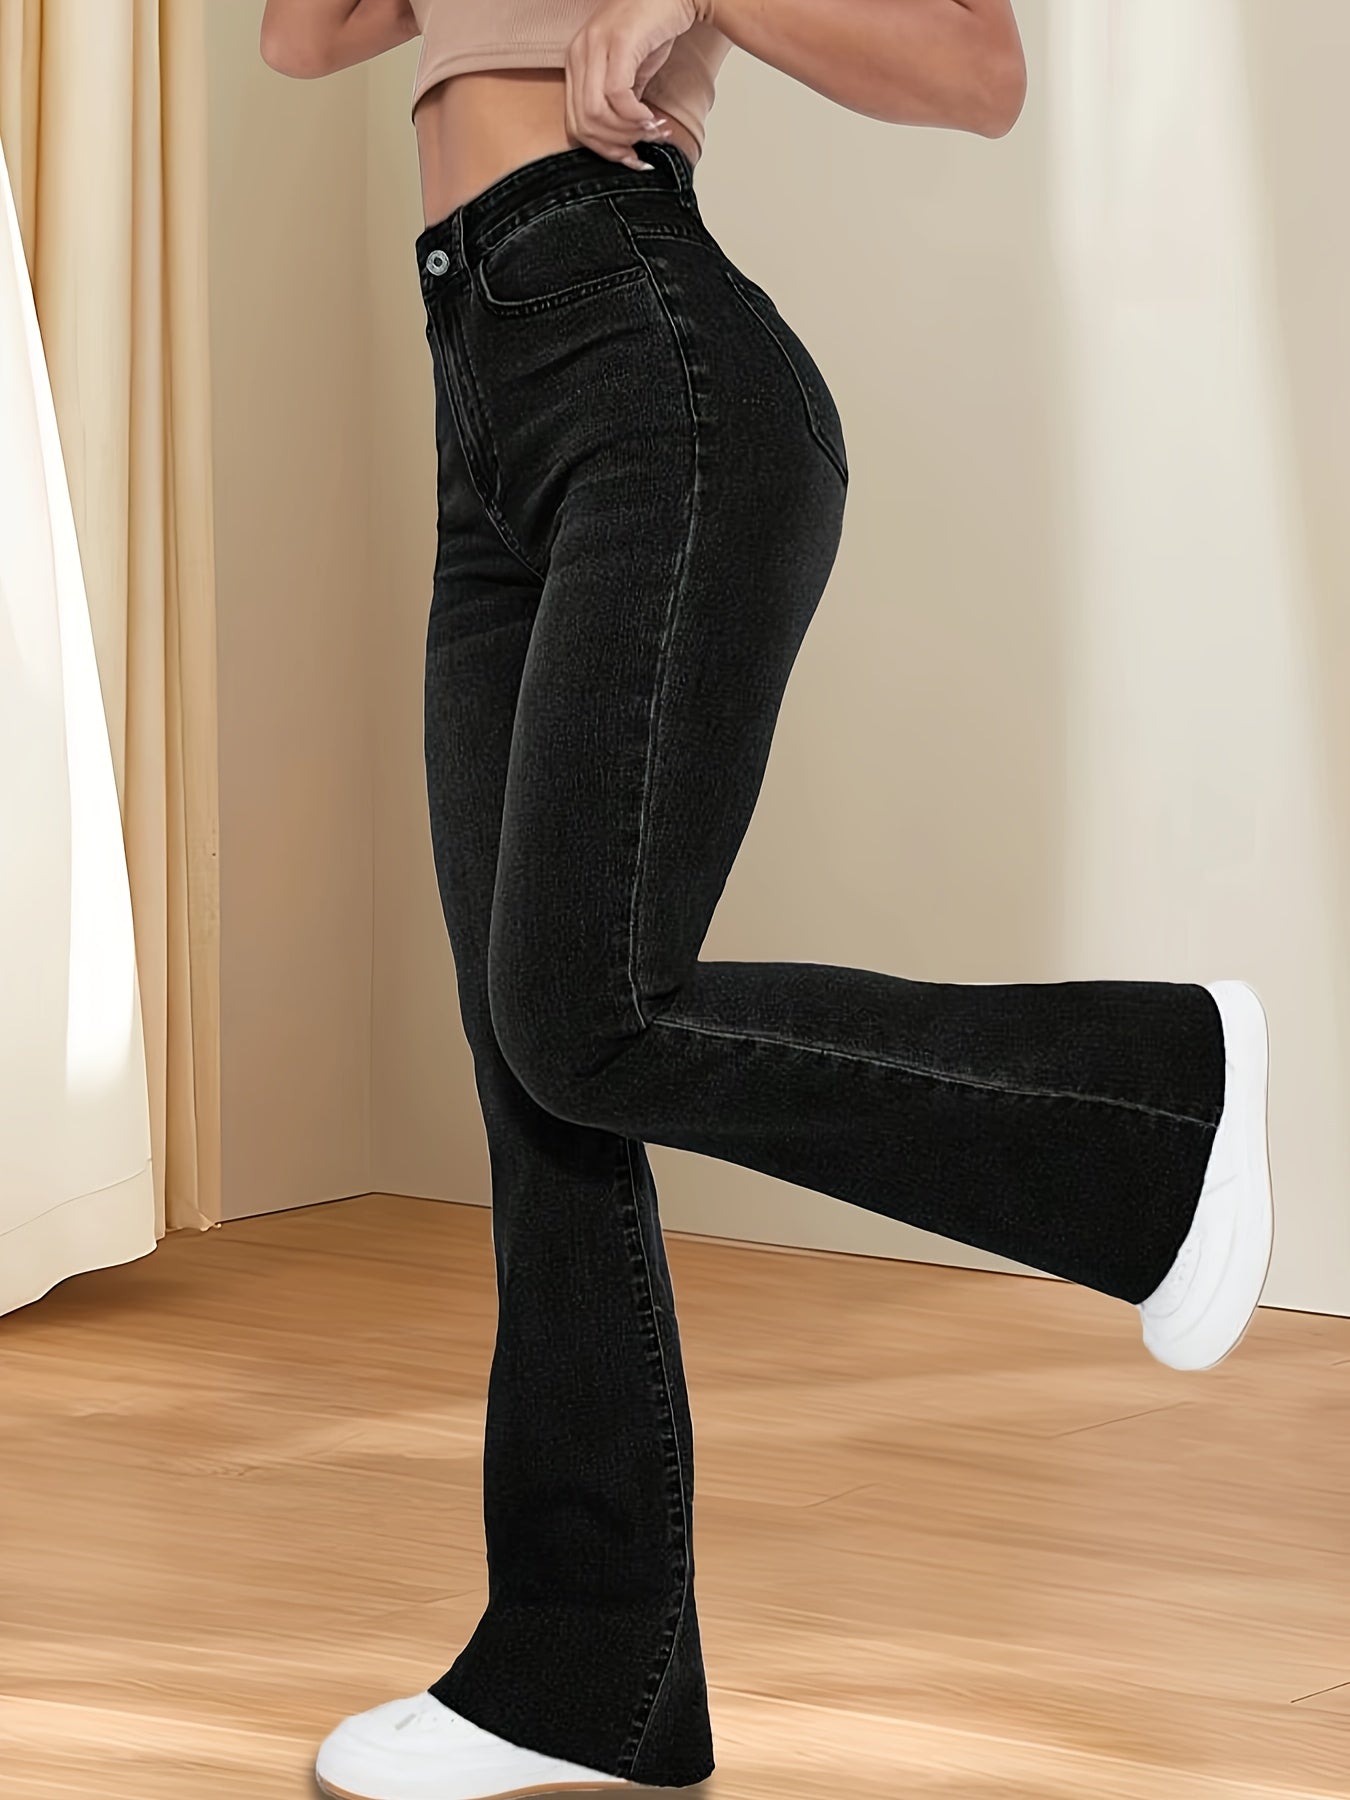 Antmvs Black Slant Pockets Flare Jeans, High Stretch Washed Bell Bottom Jeans, Women's Denim Jeans & Clothing